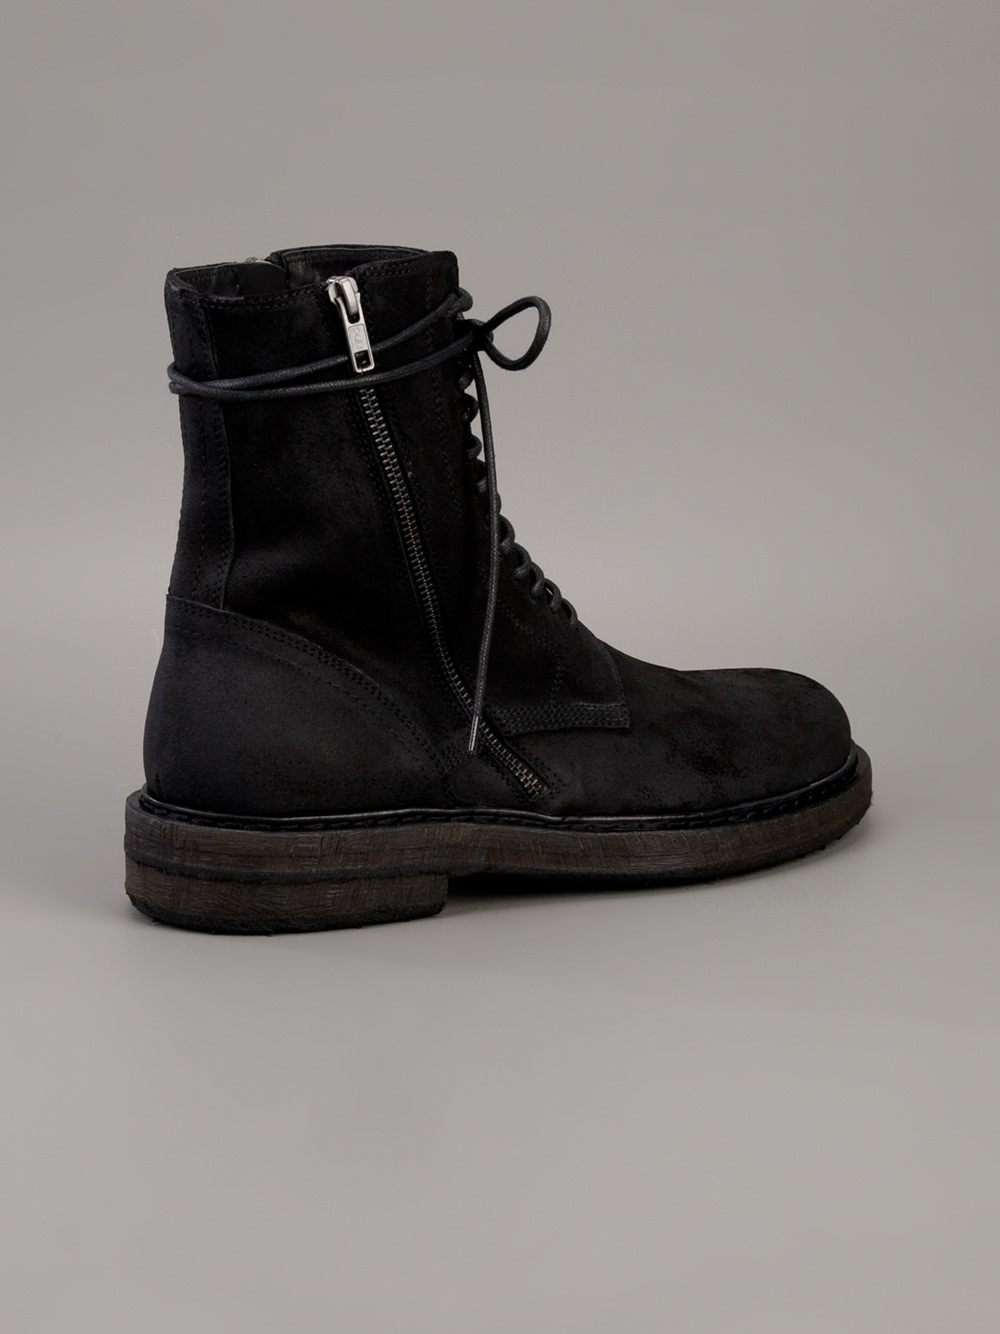 Ann Demeulemeester Scamosciato Ingrassato Boots in Black for Men - Lyst